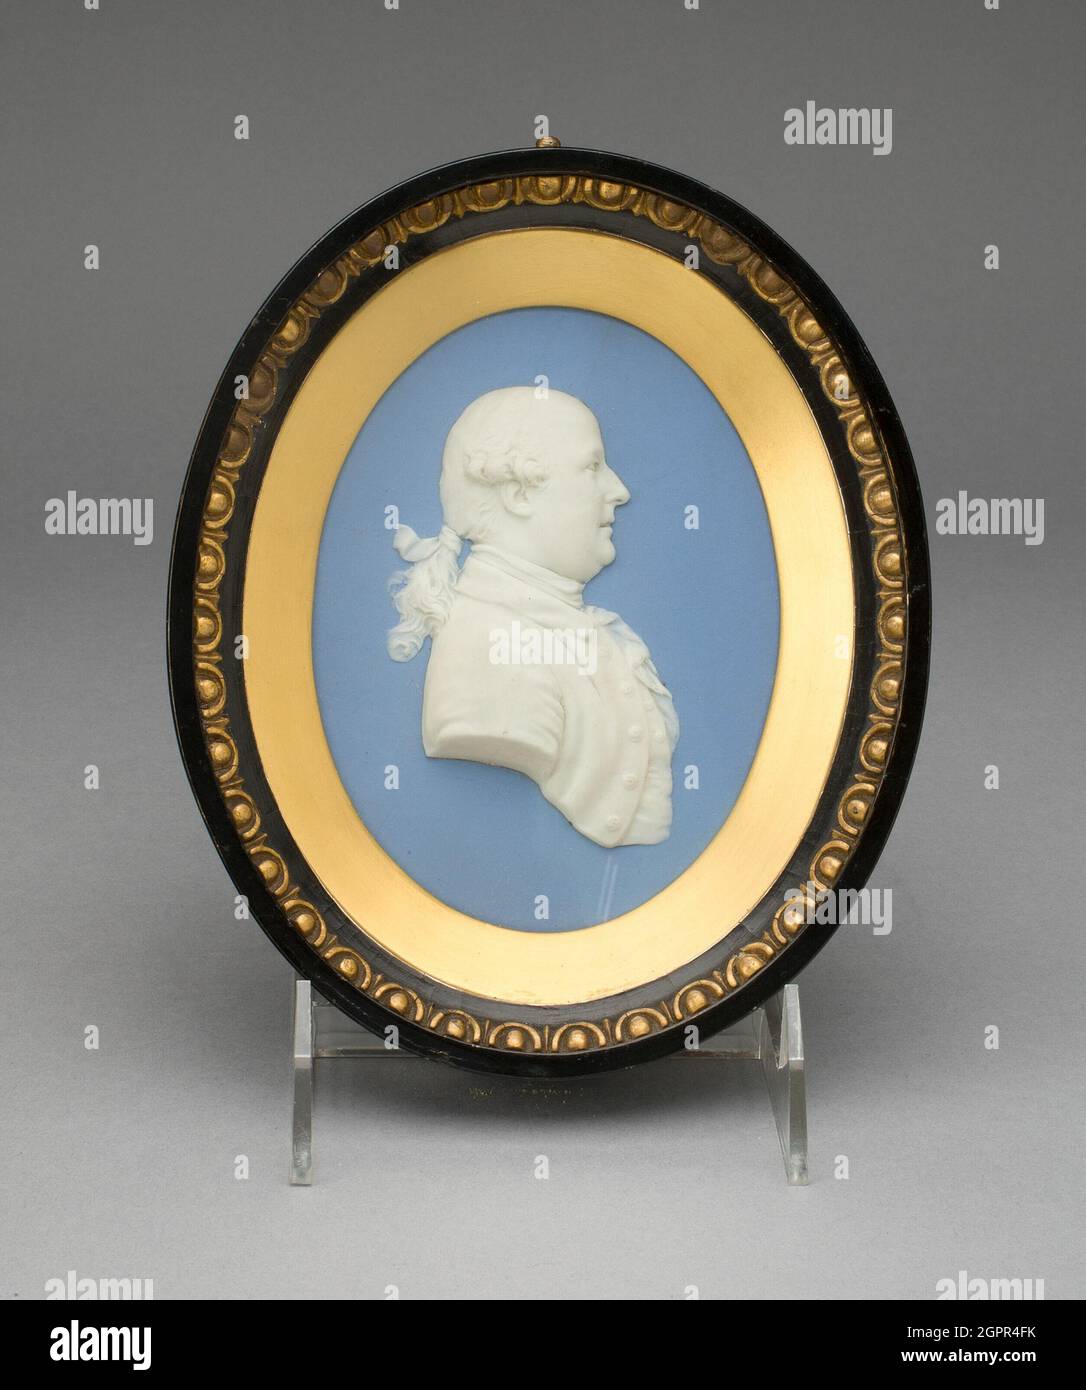 Medallion with Portrait of Thomas Bentley, Burslem, c. 1775. Stock Photo